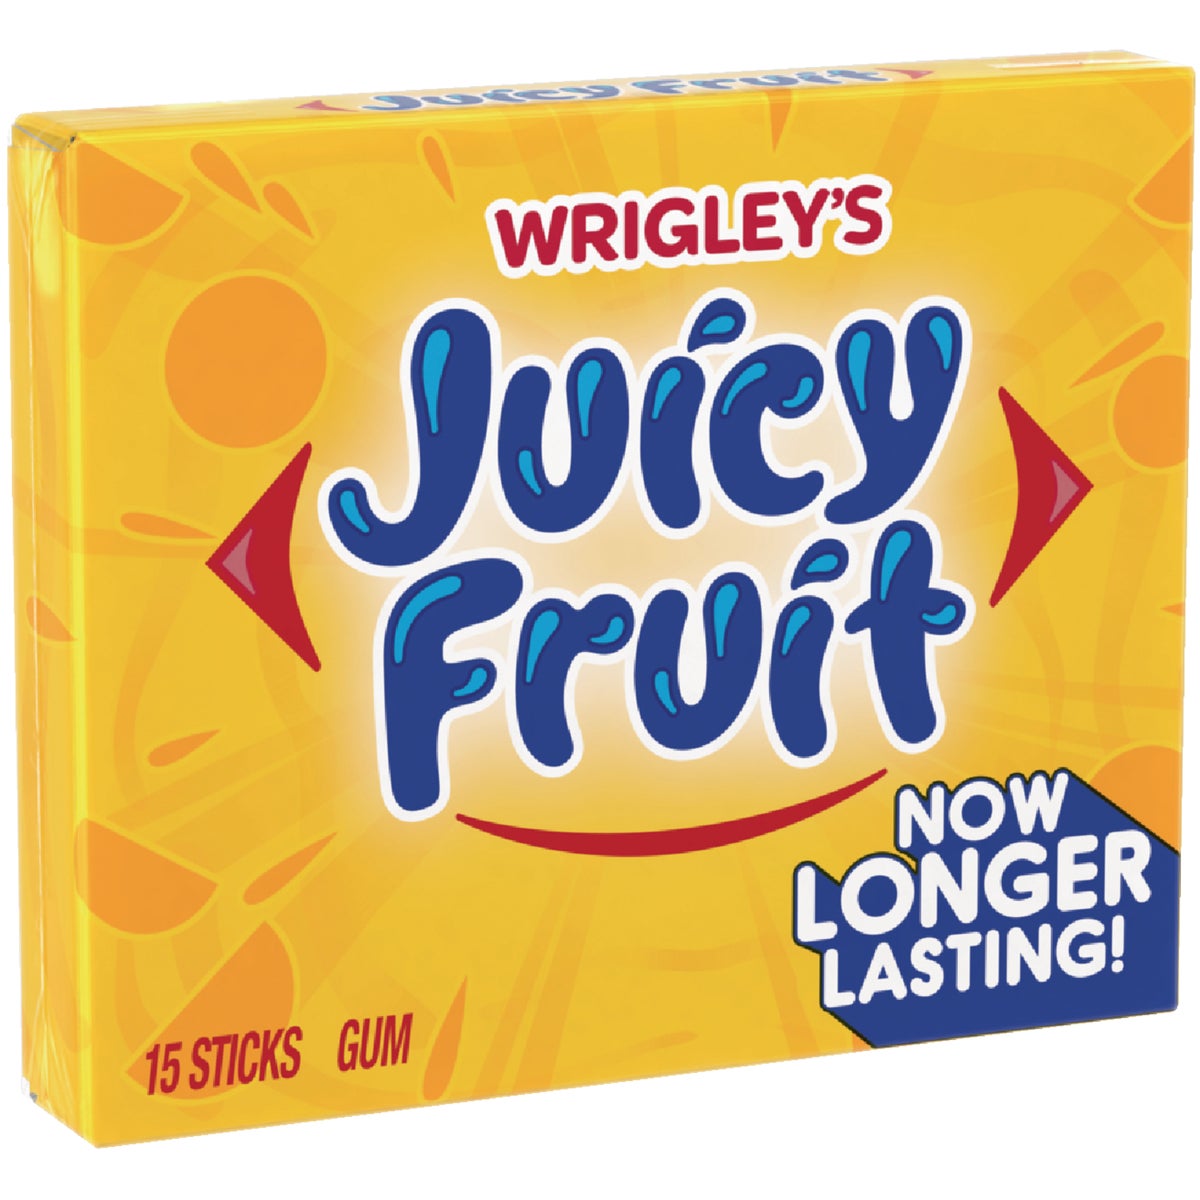 Item 972282, Plenty pack of Juicy Fruit, fruity flavor chewing gum.